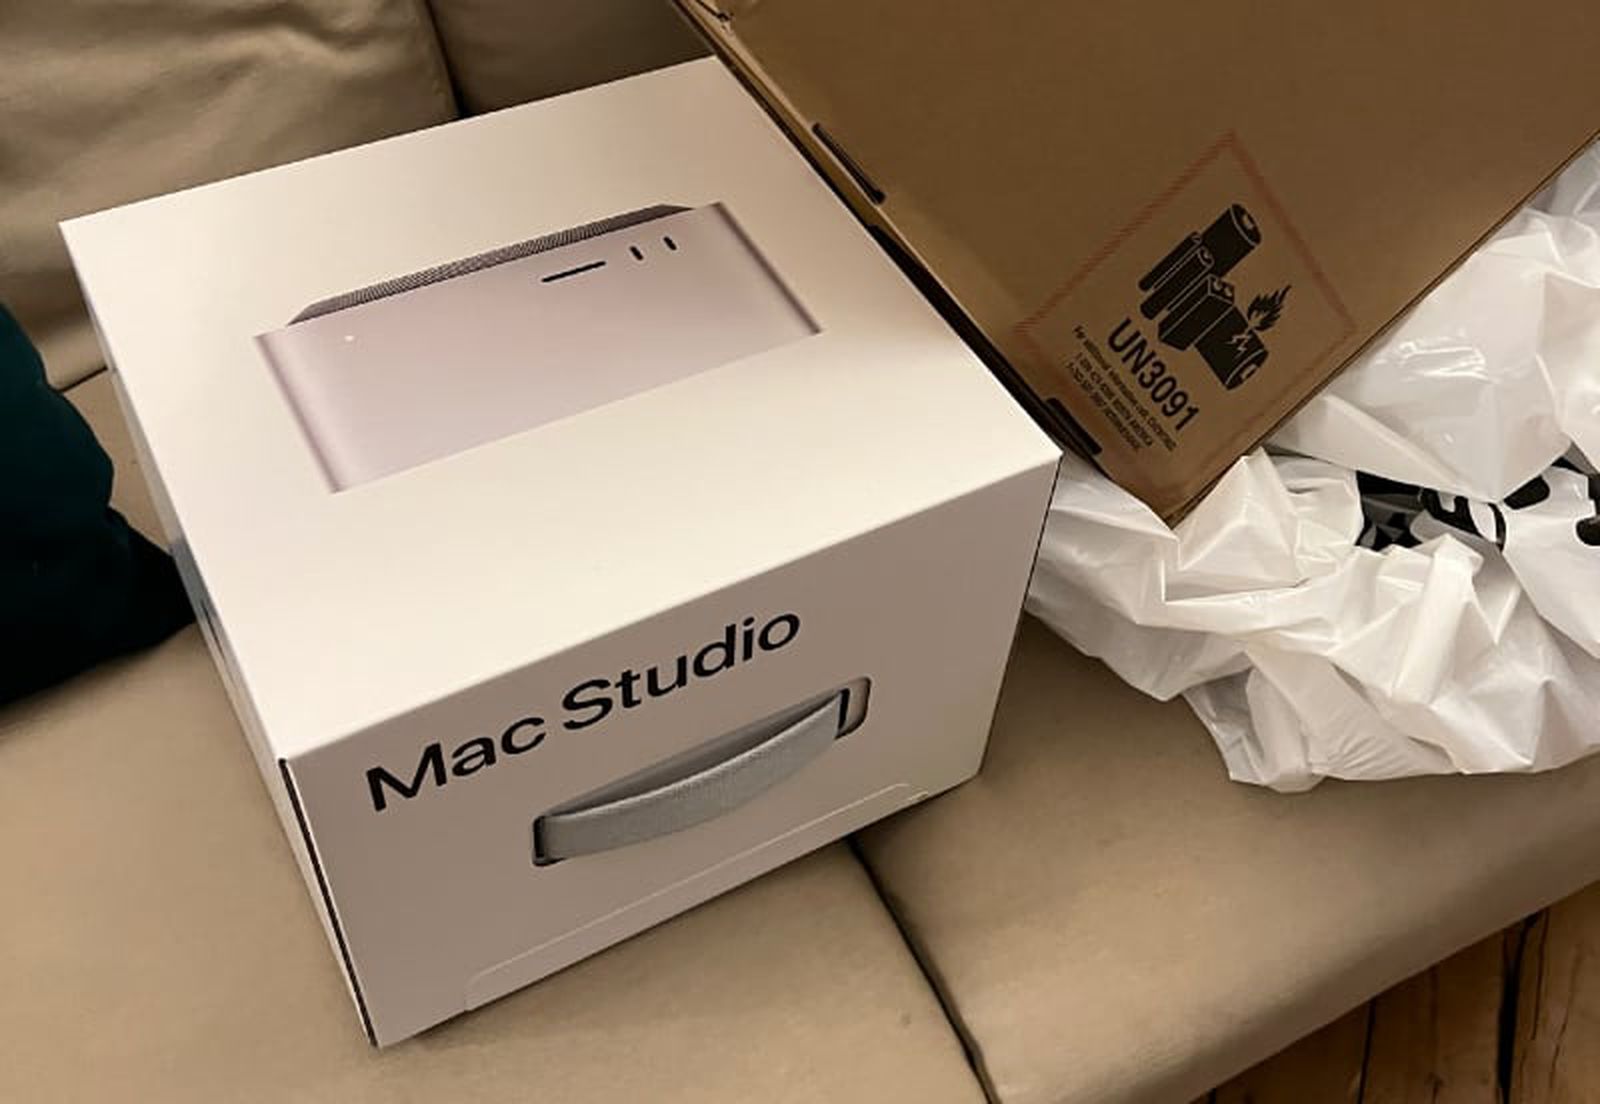 Lucky Customer Receives Mac Studio Days Ahead of Schedule